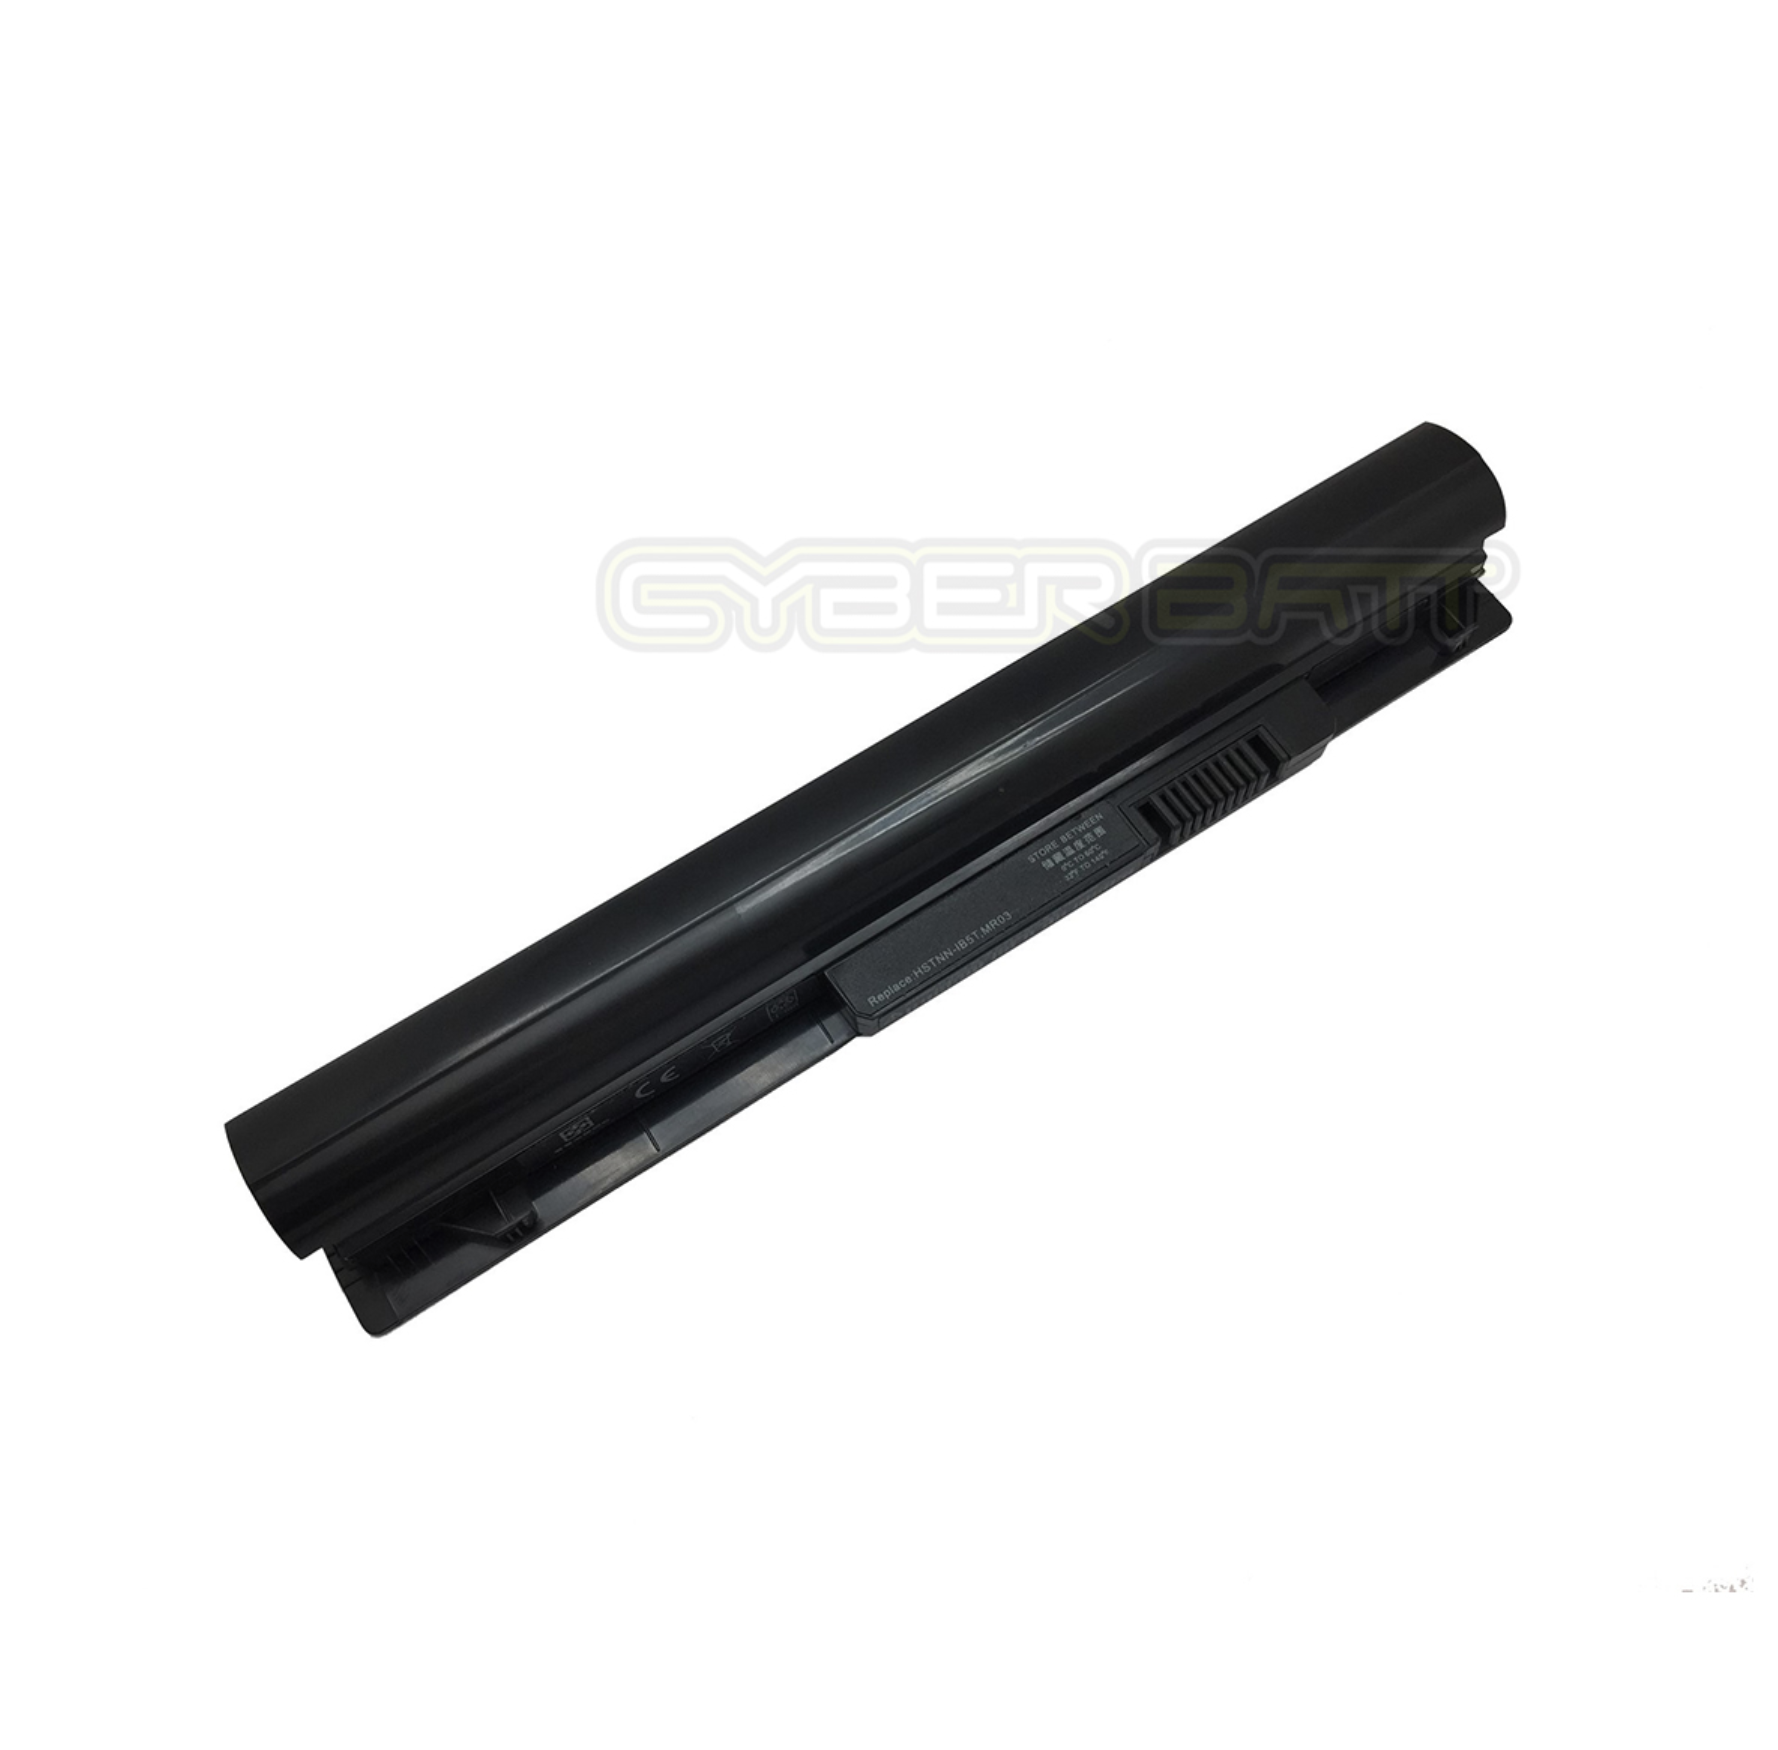 Battery HP Pavilion 10 TouchSmart Series MR03 : 10.8V-2200mAh Black (CBB)